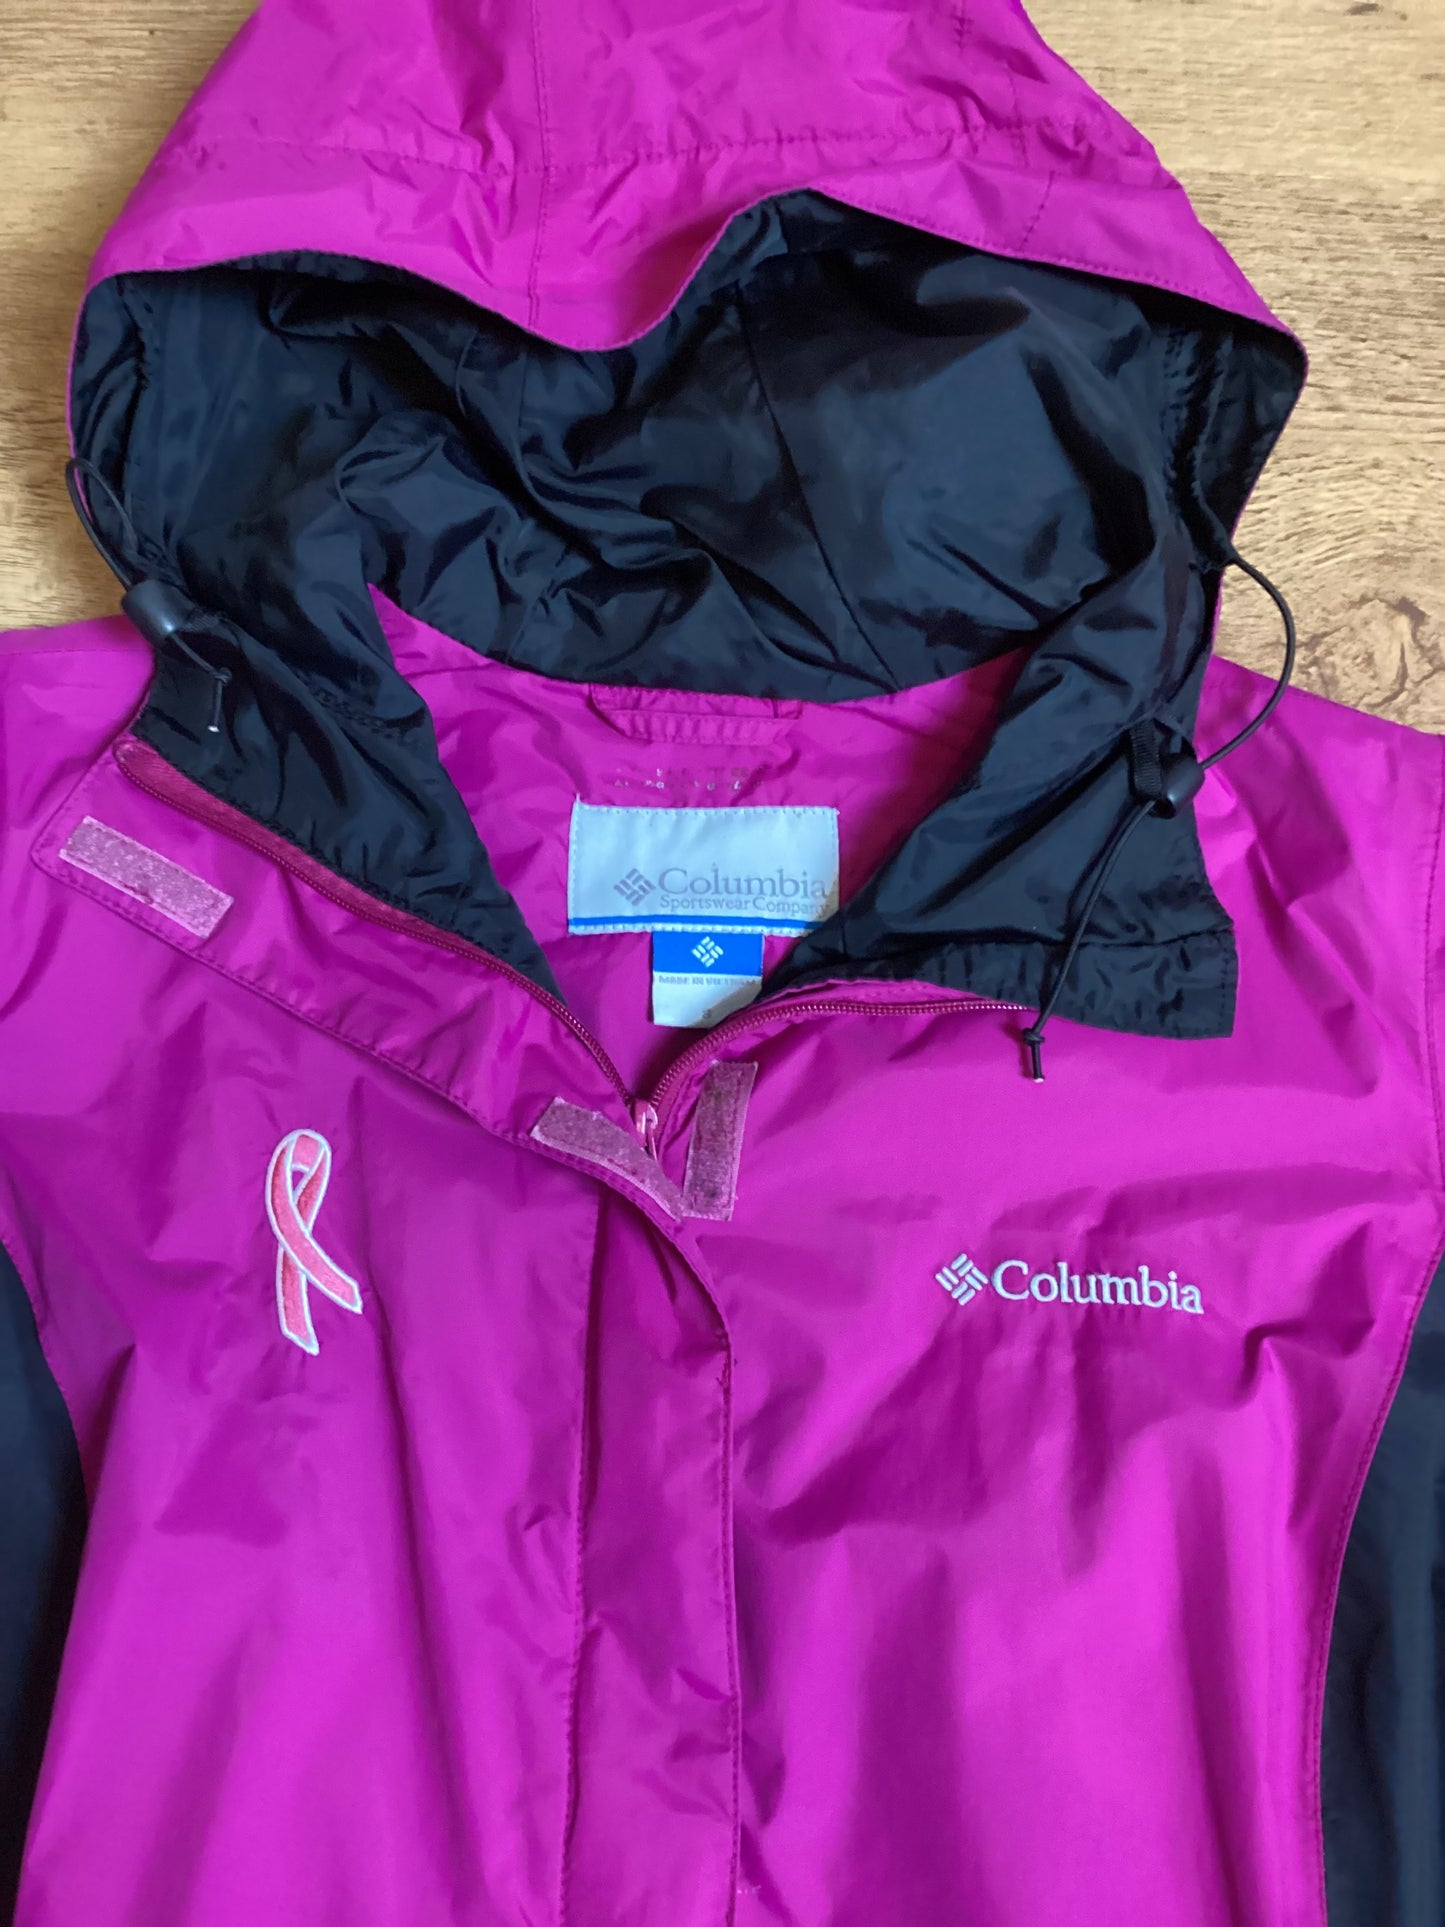 Columbia Pink Windbreaker Jacket Size S